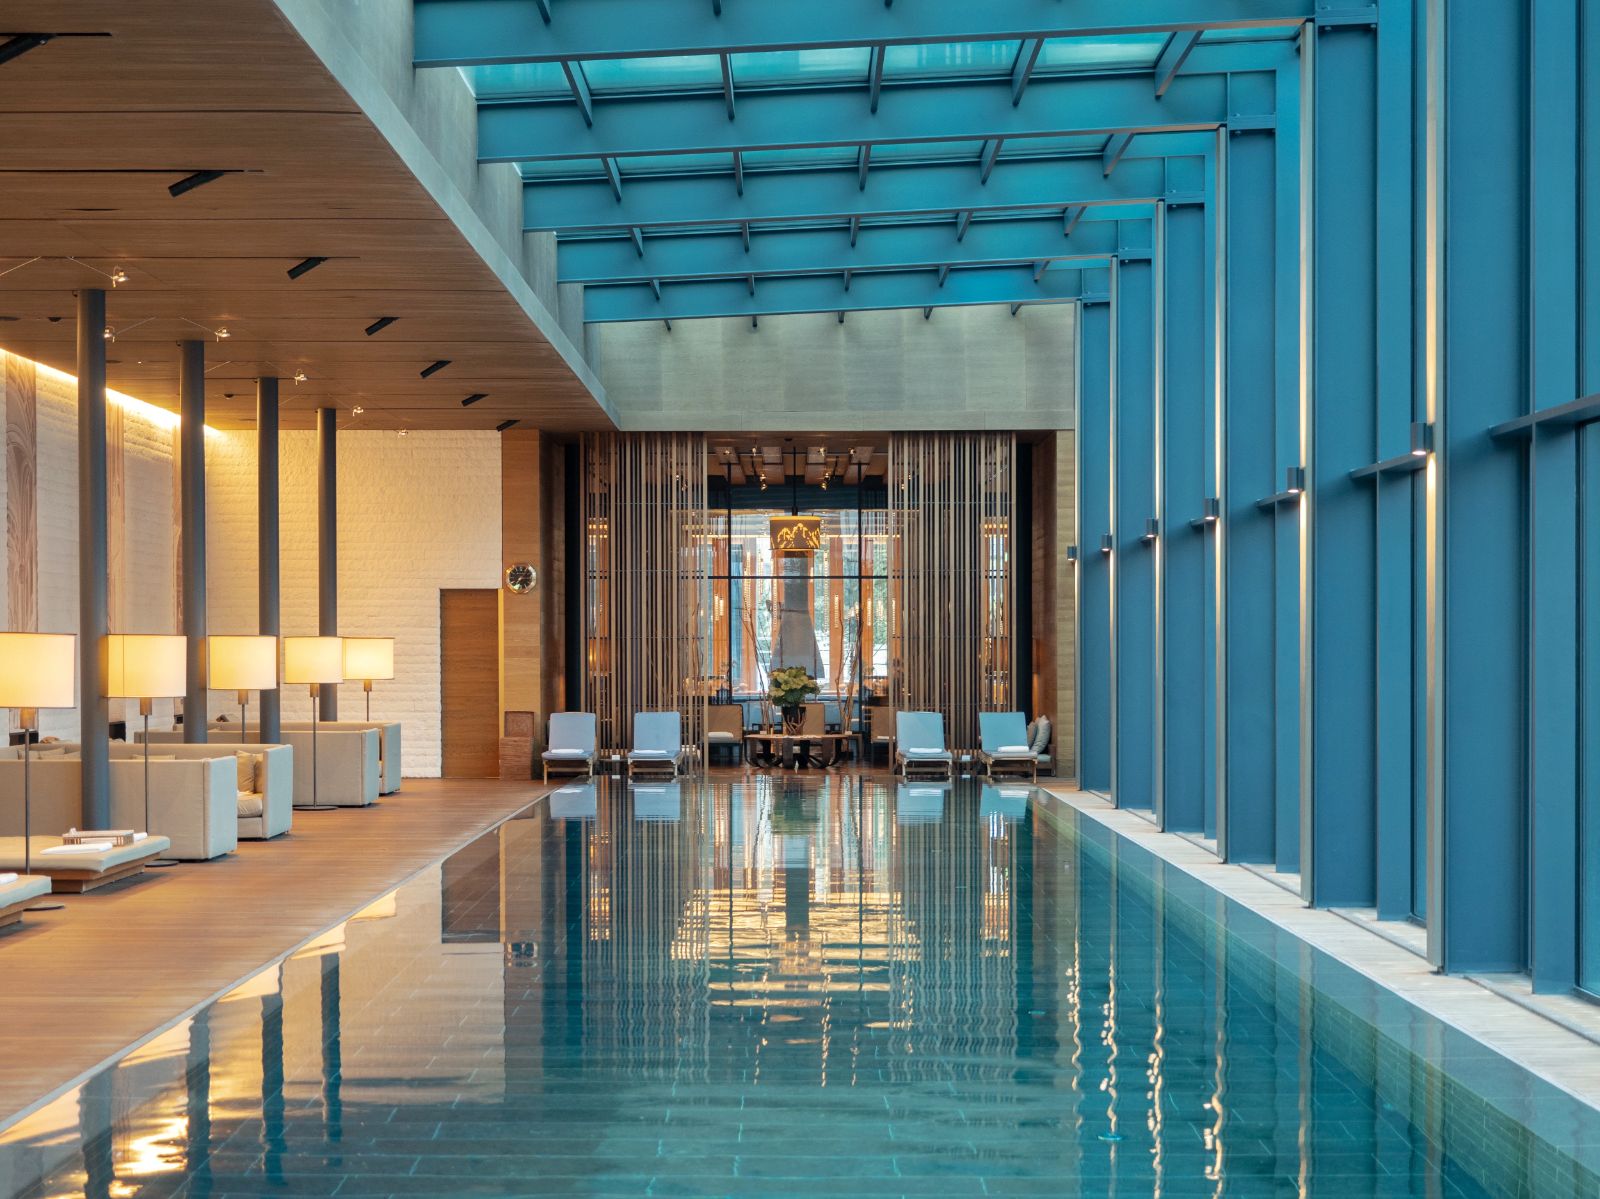 Luxury Resort Chedi Andermatt in Switzerland Spa Swimming Pool